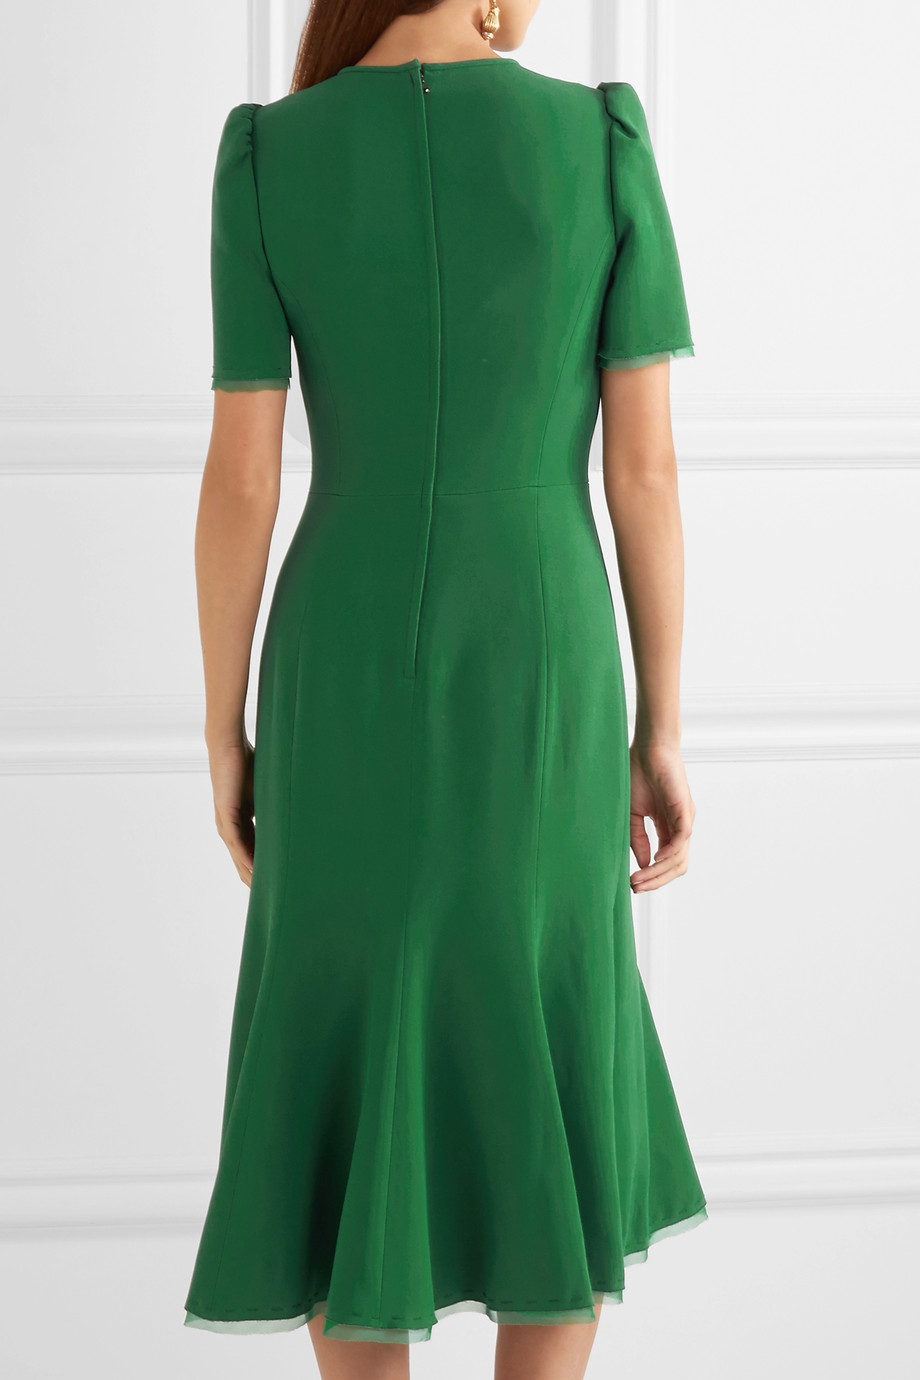 Getalenteerd Teleurstelling Cornwall Kate Middleton Dolce & Gabbana Green Midi Dress